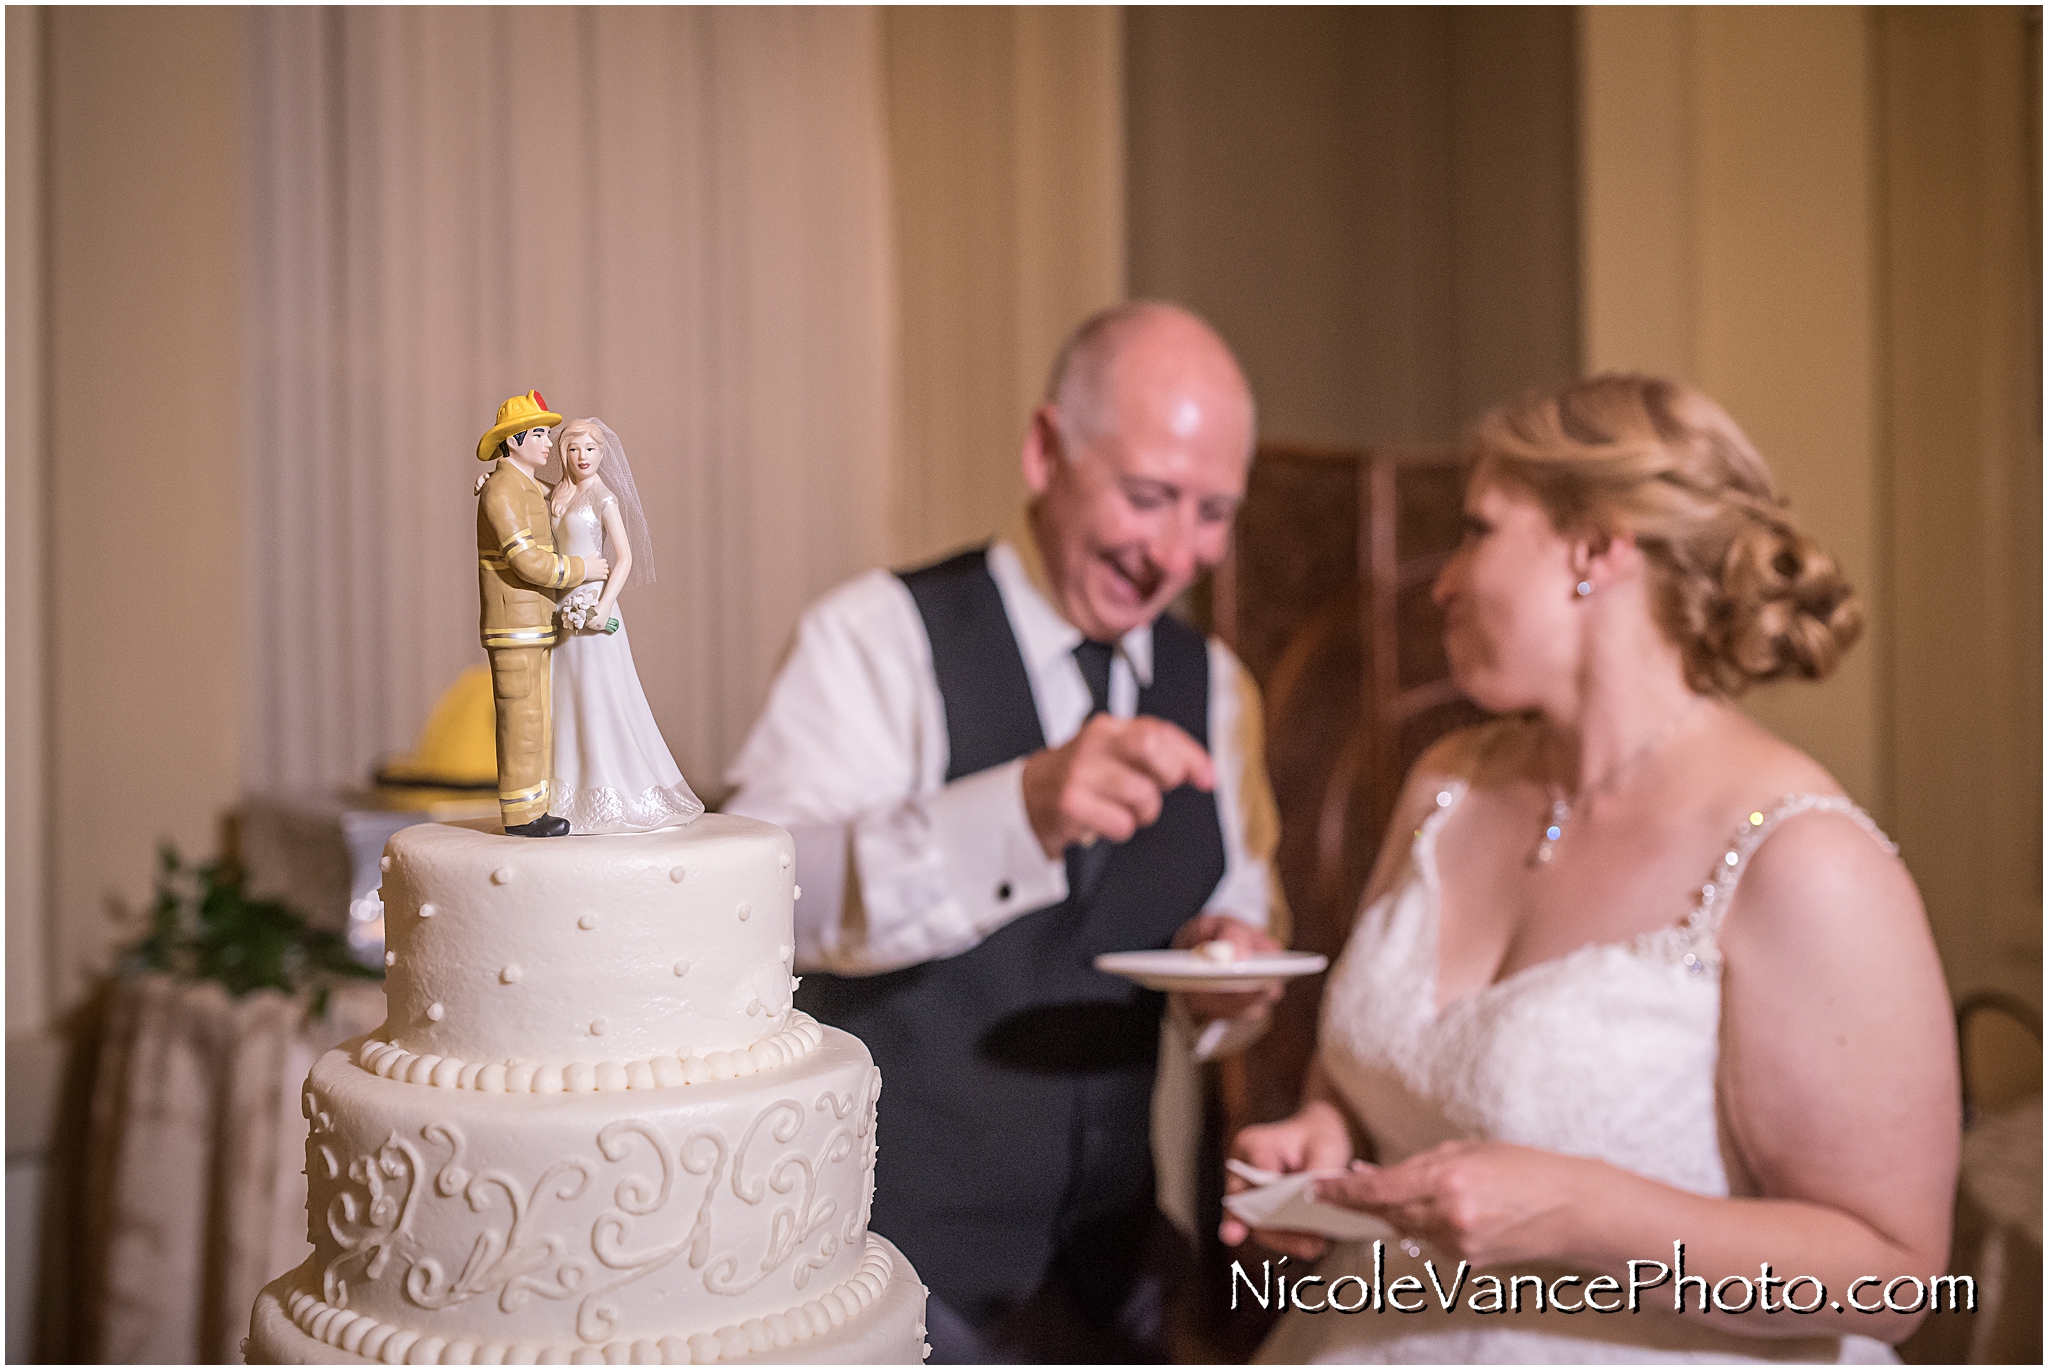 The couple enjoy their wedding cake prepared by Sugar Cain Bakery.